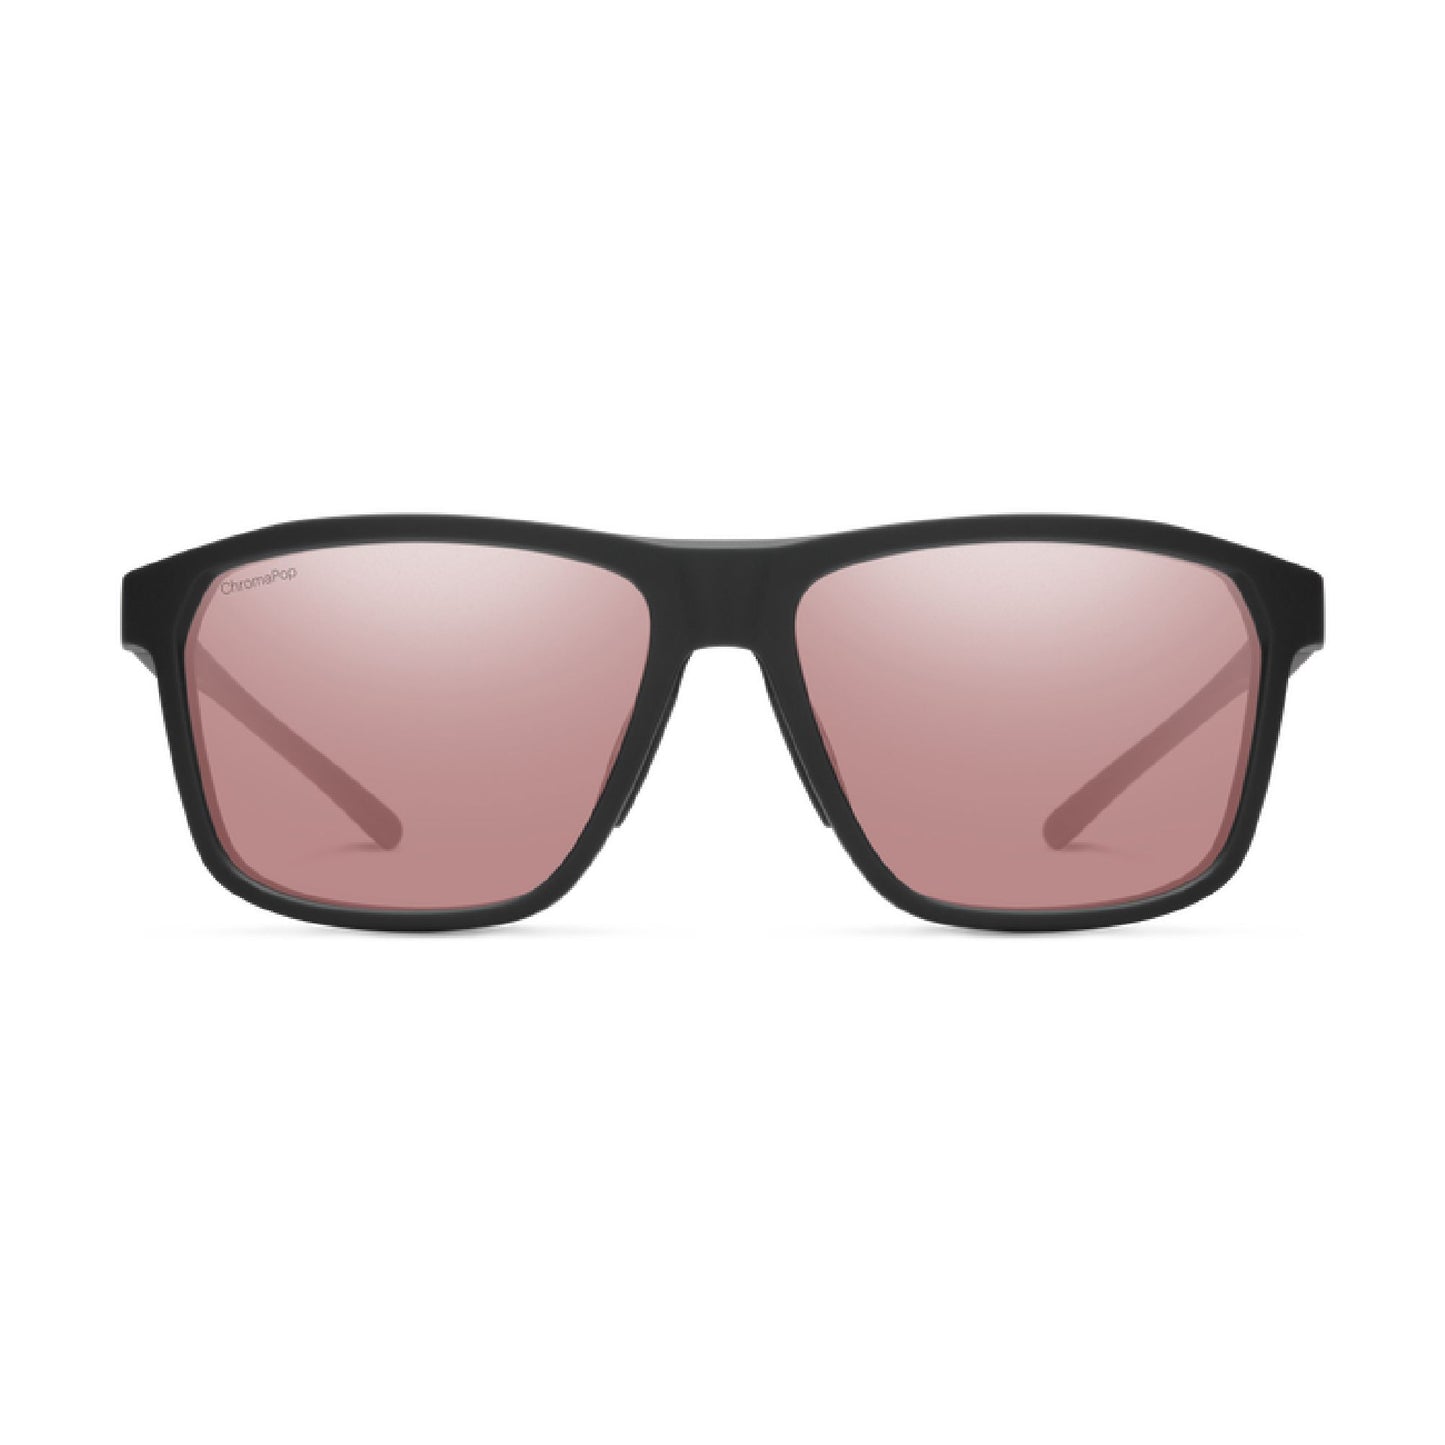 Smith Pinpoint Sunglasses Matte Black ChromaPop Ignitor Sunglasses